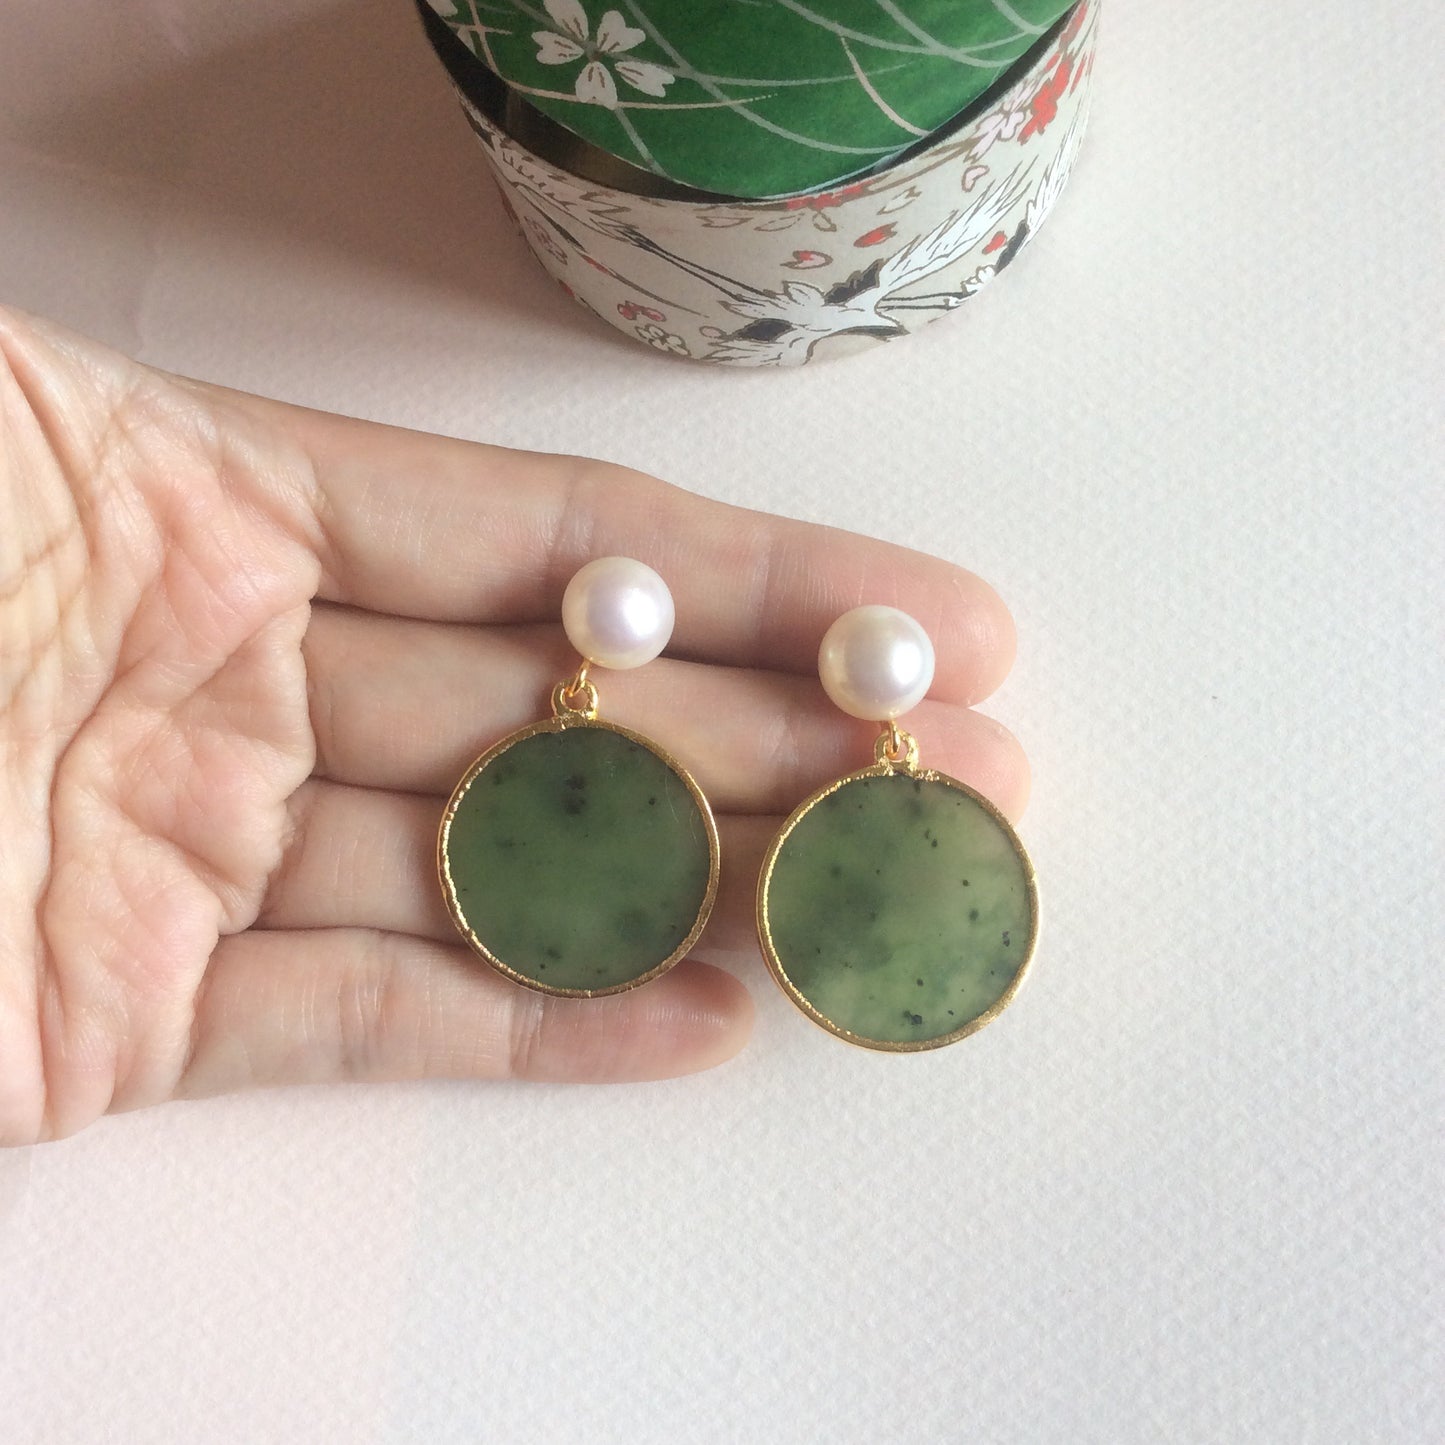 Disc jade earrings with FW pearls